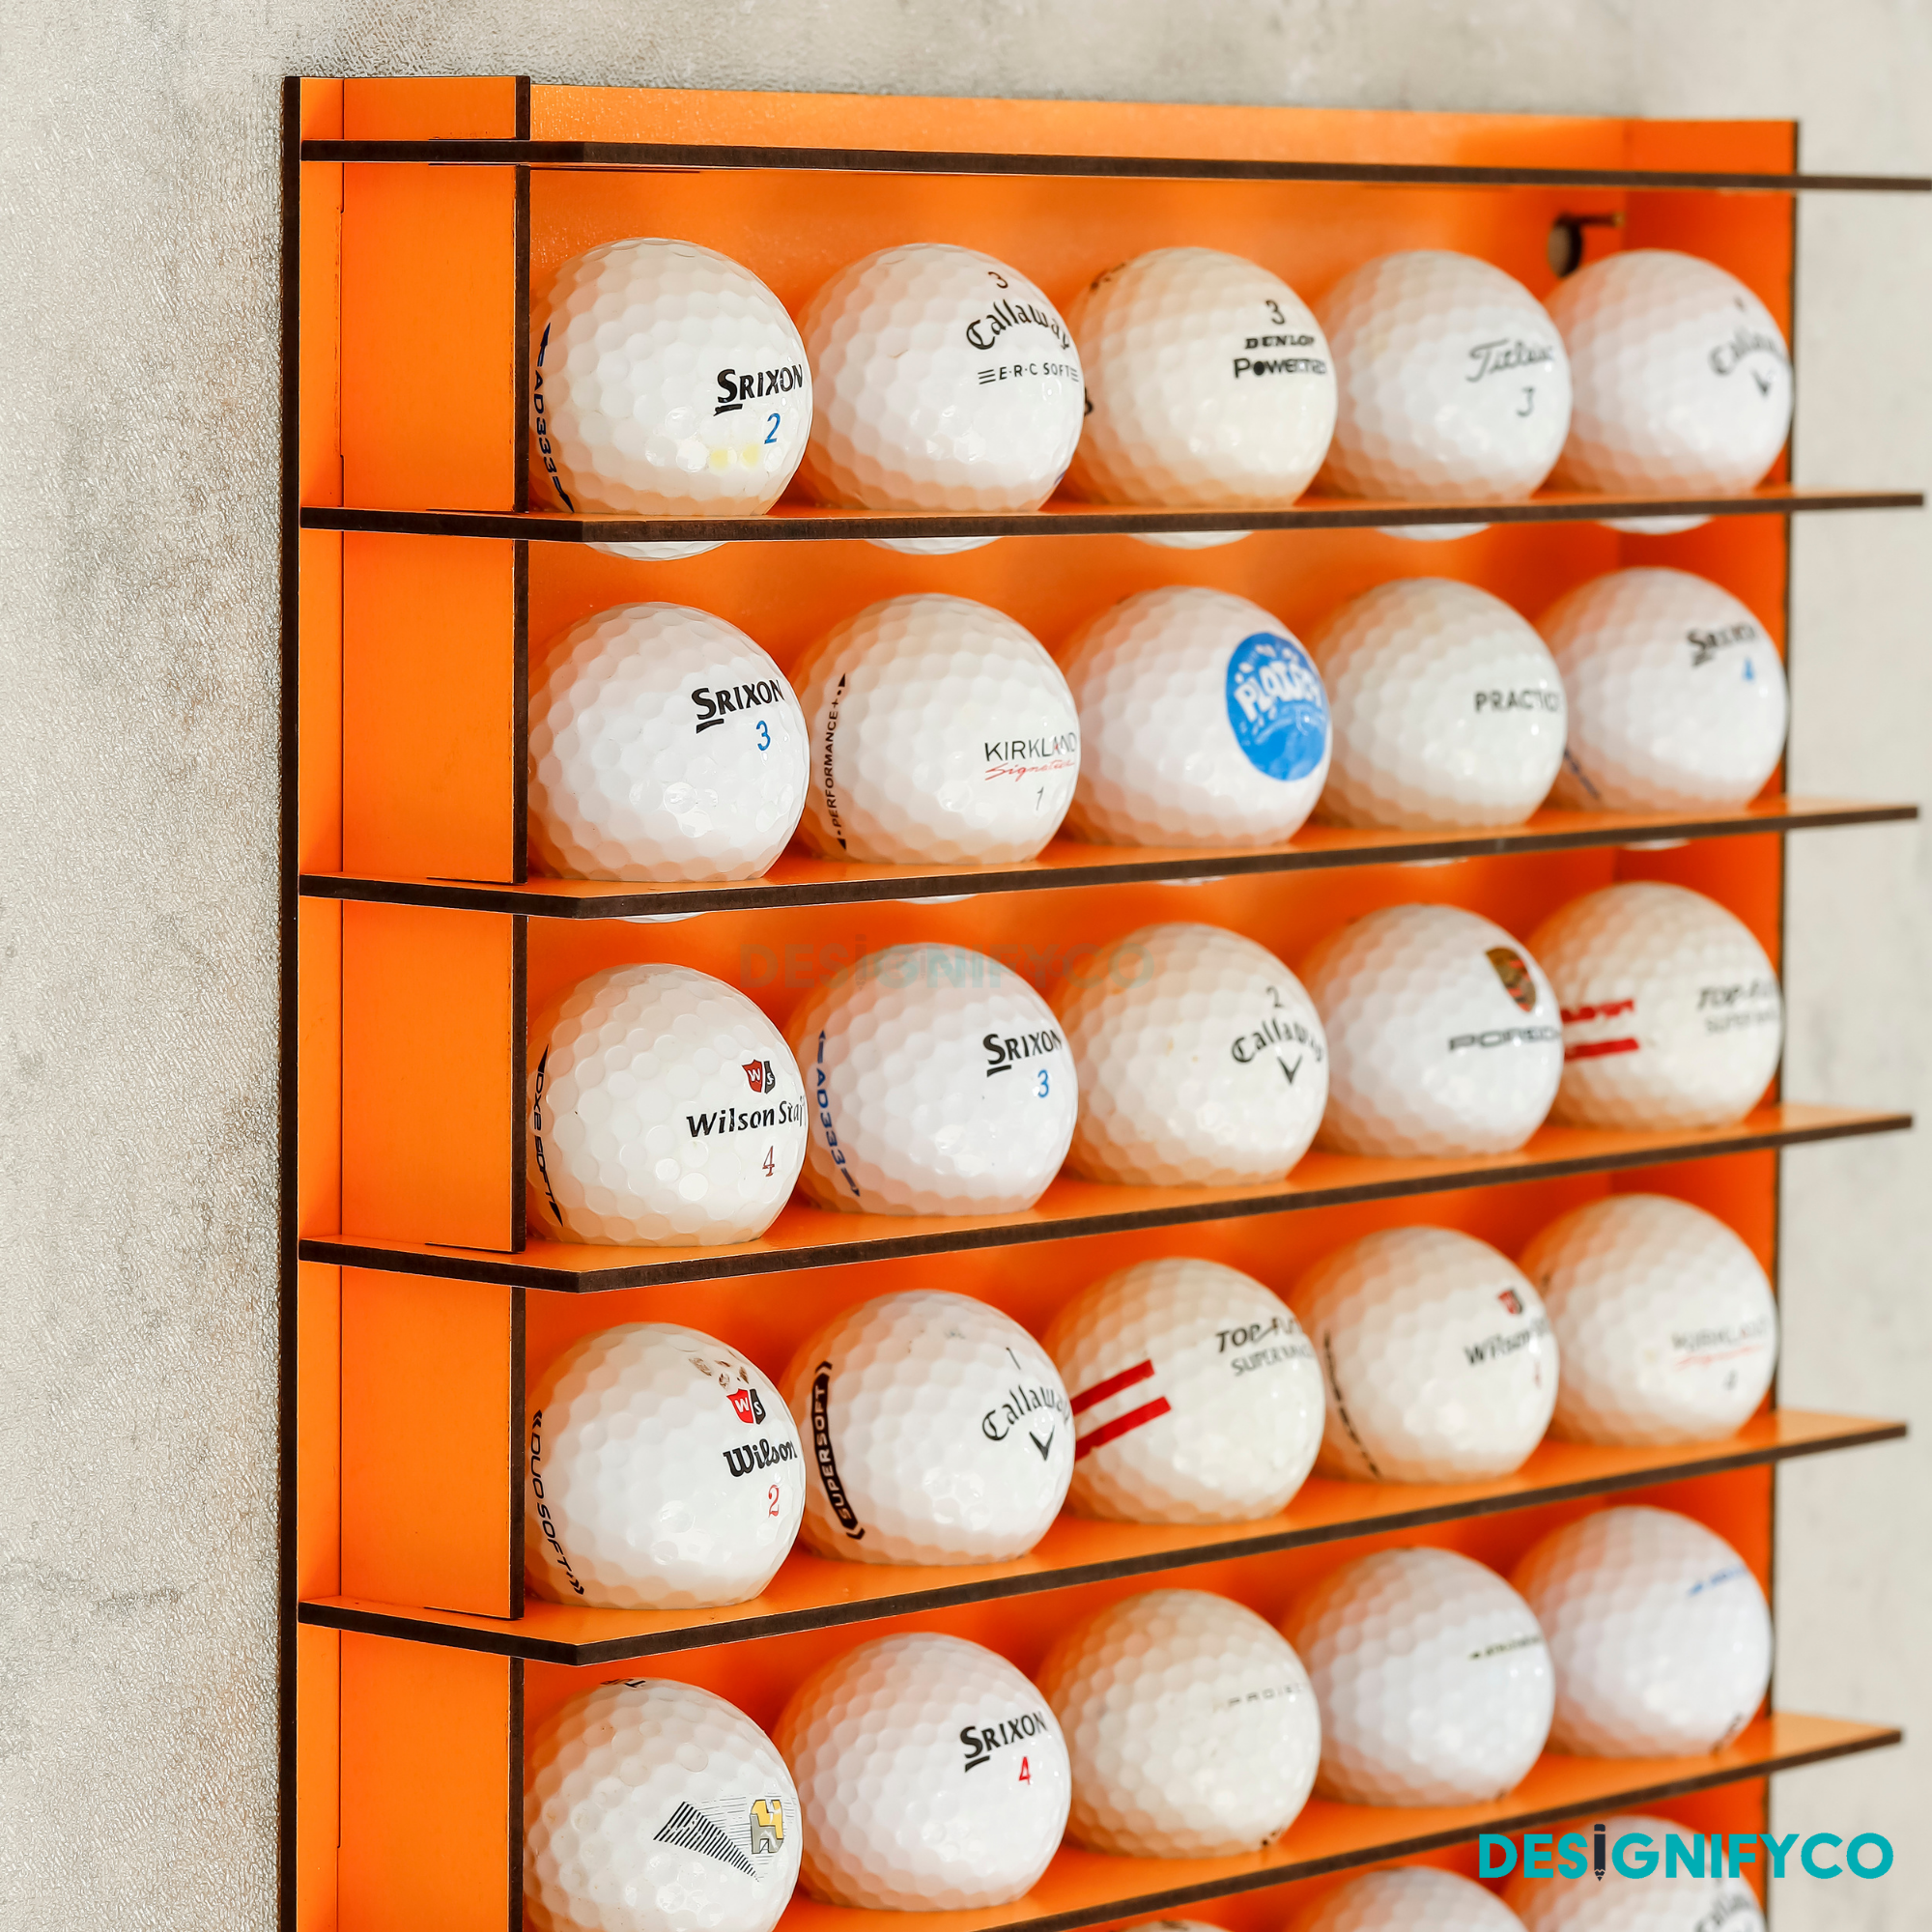 ORANGE Golf Ball Display For 50 Golf Ball